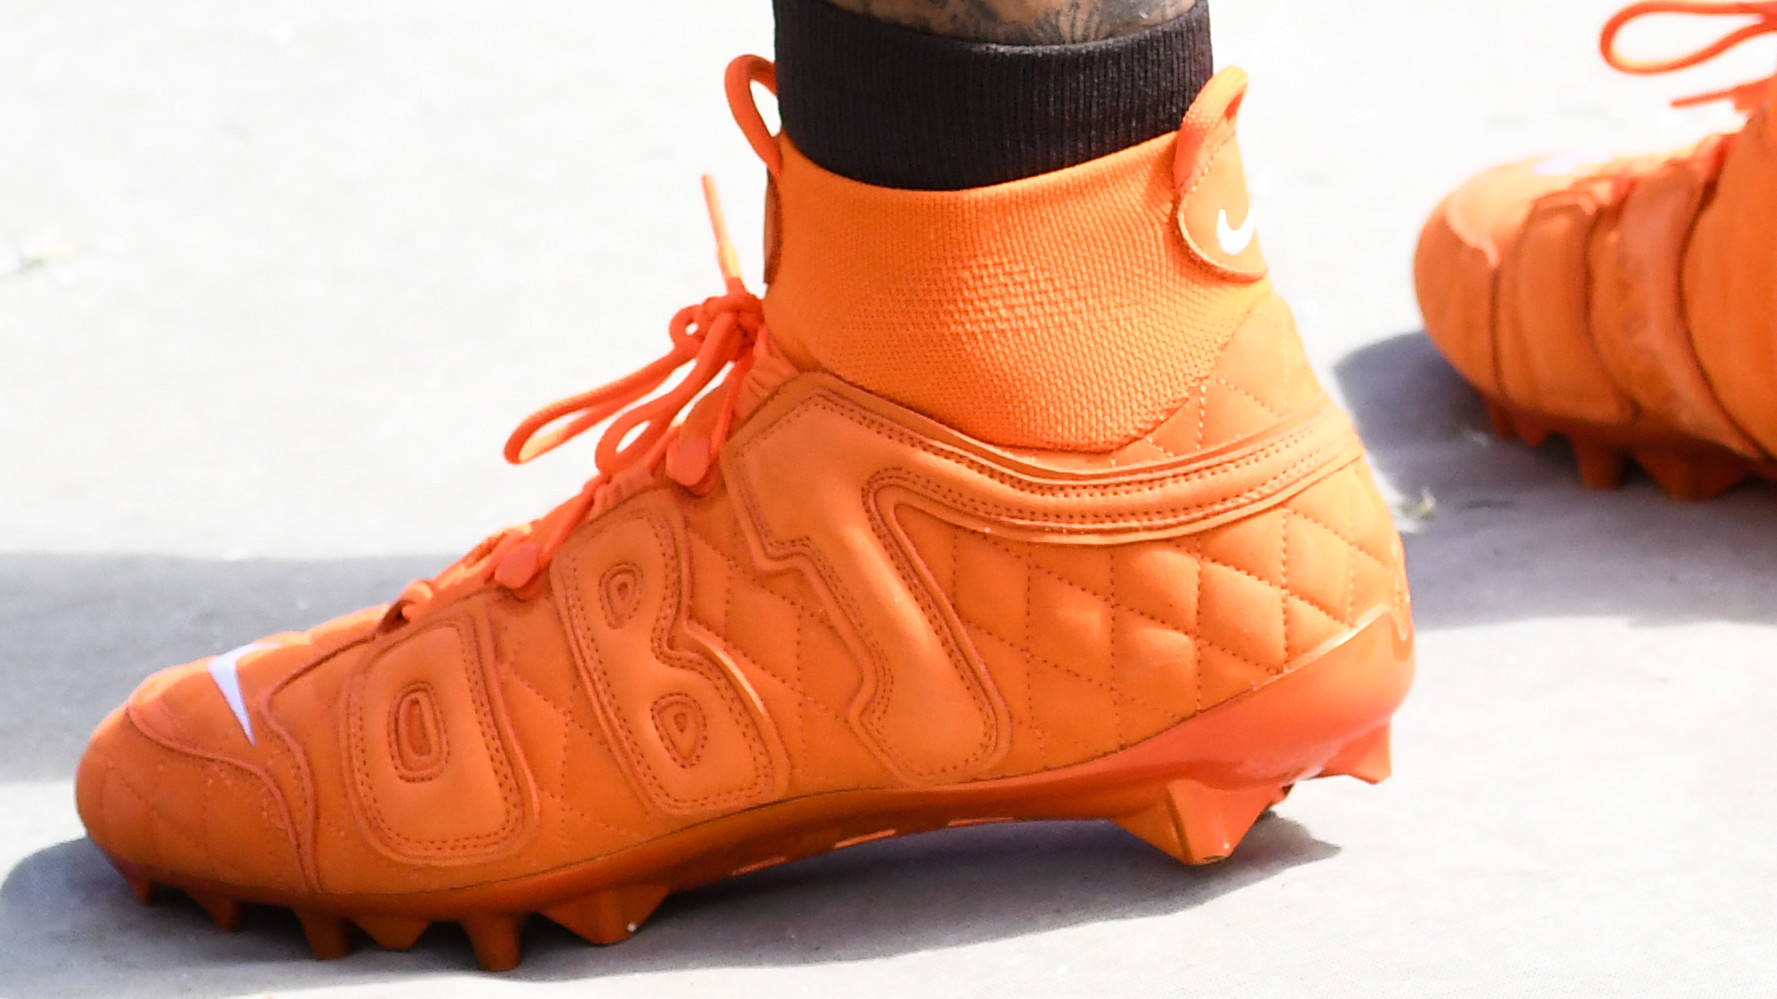 Nike Unveils Dog-Inspired Cleats for Odell Beckham Jr.